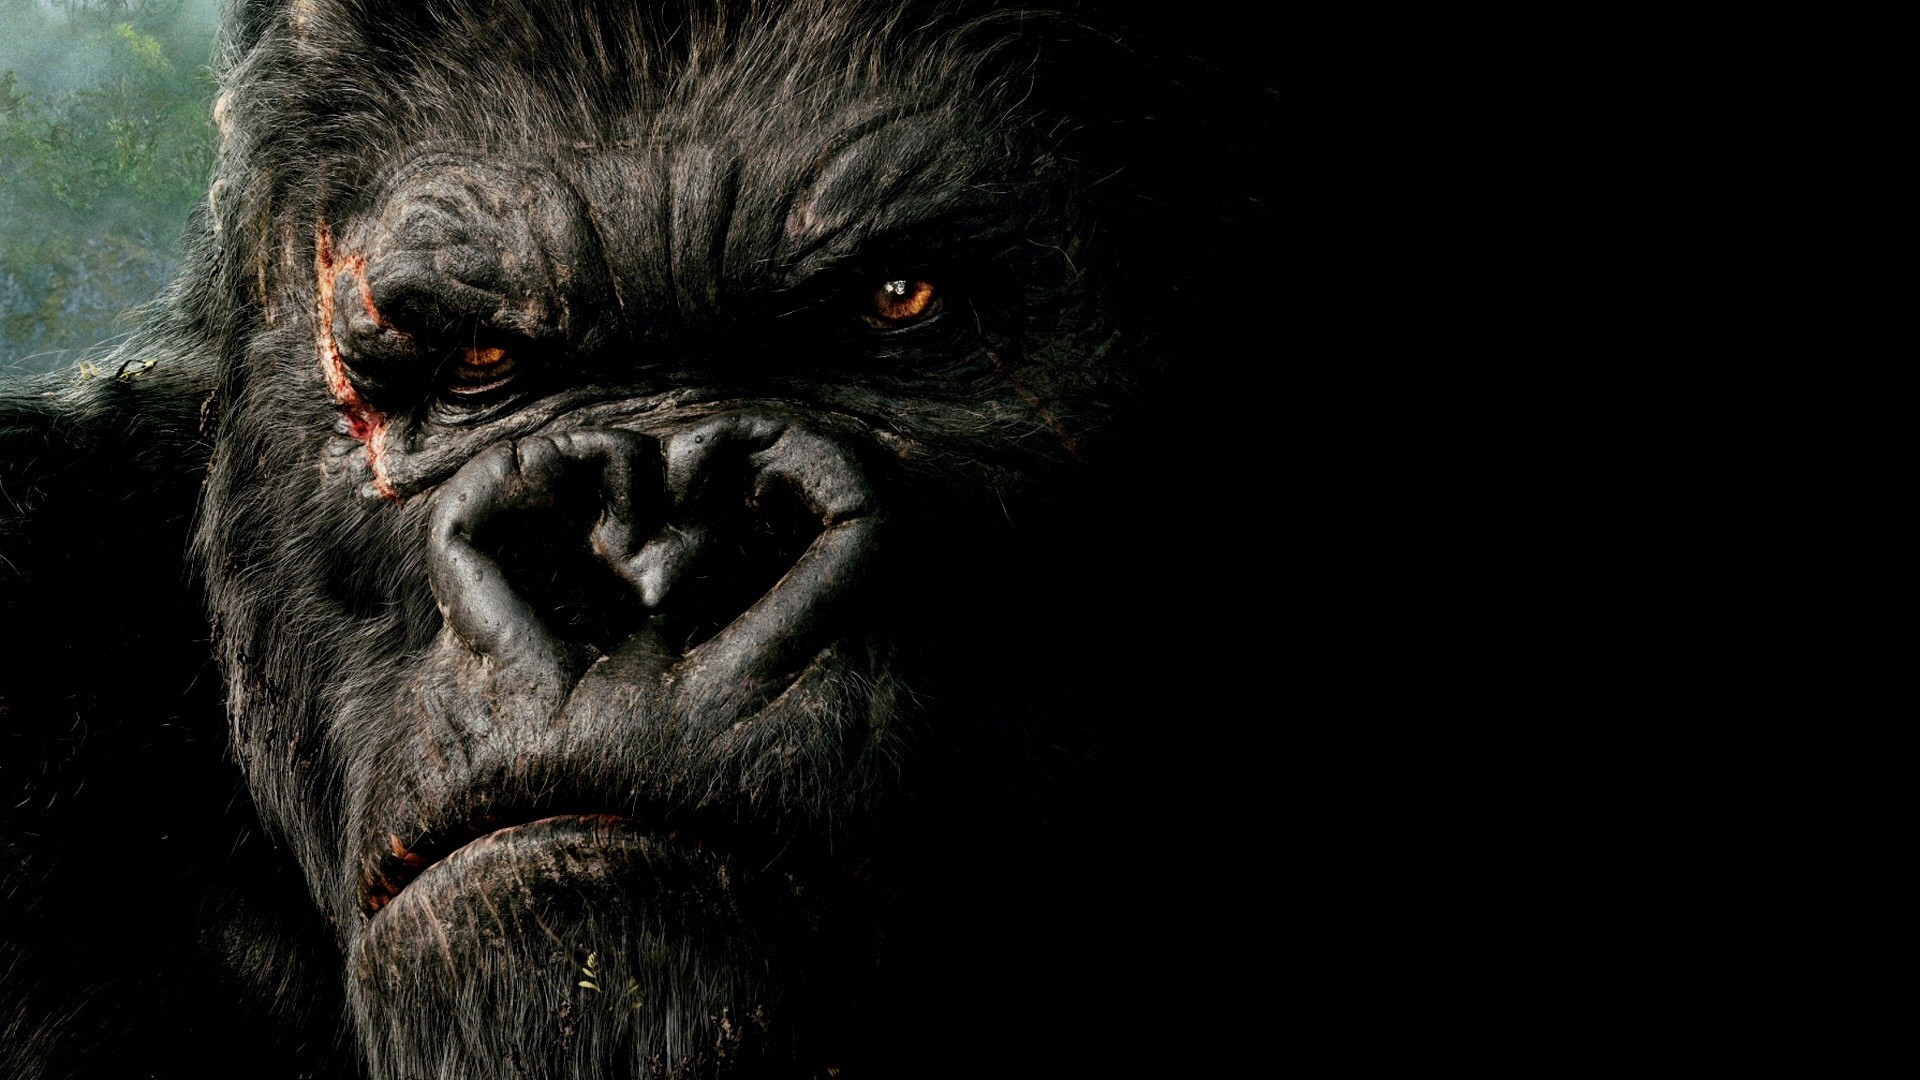 Movies King Kong Creature 2005 Year 1920x1080